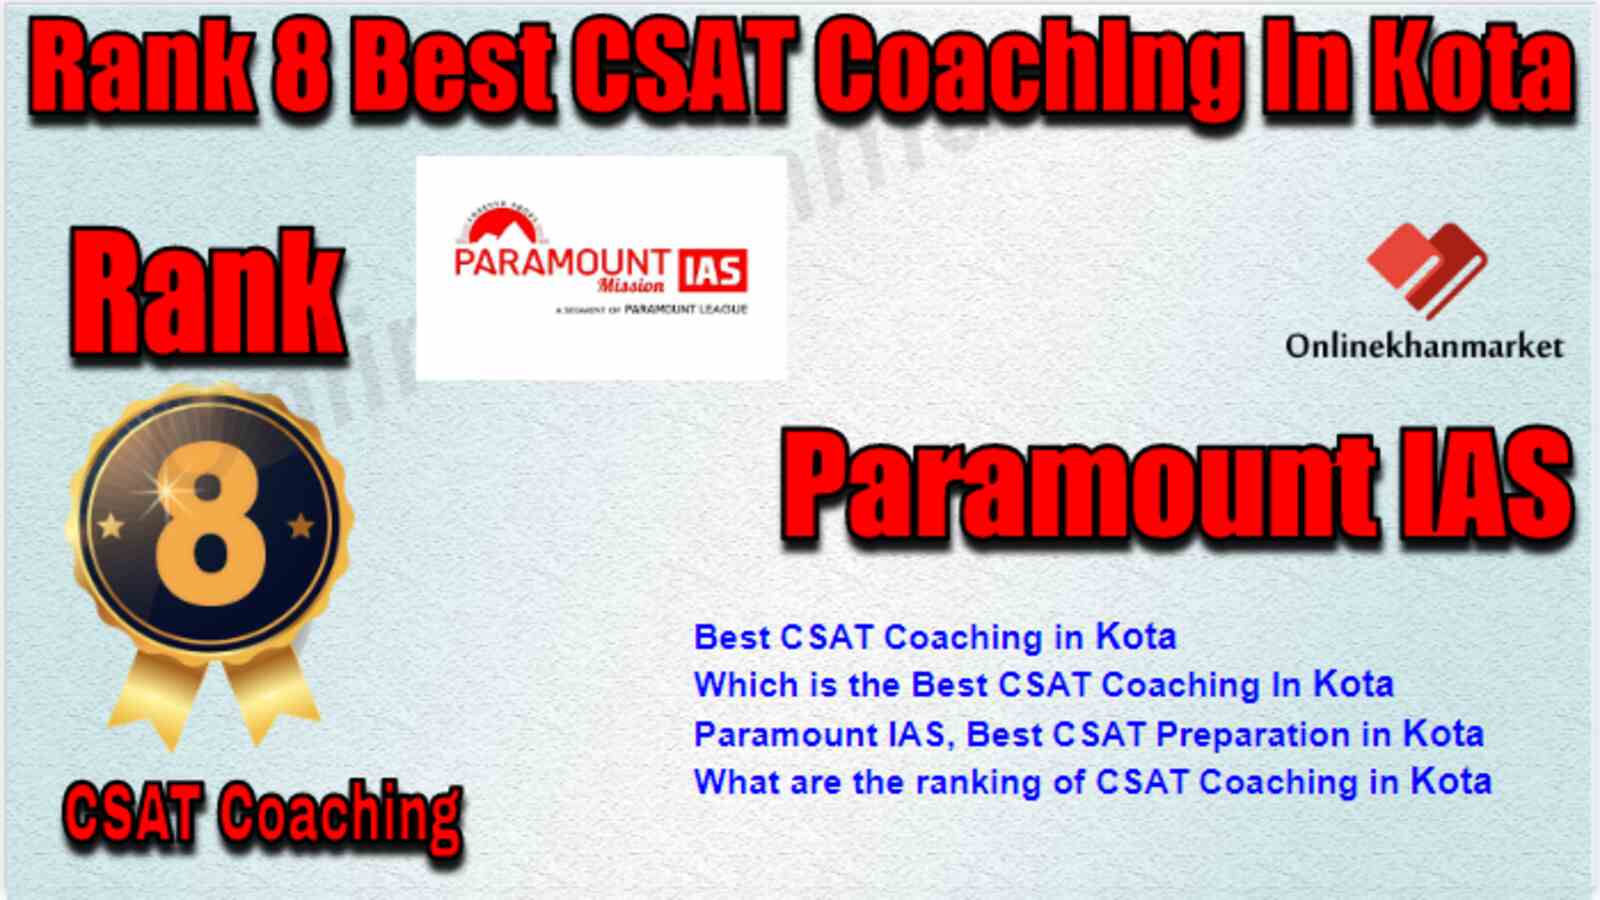 Rank 8 Best CSAT Coaching in Kota